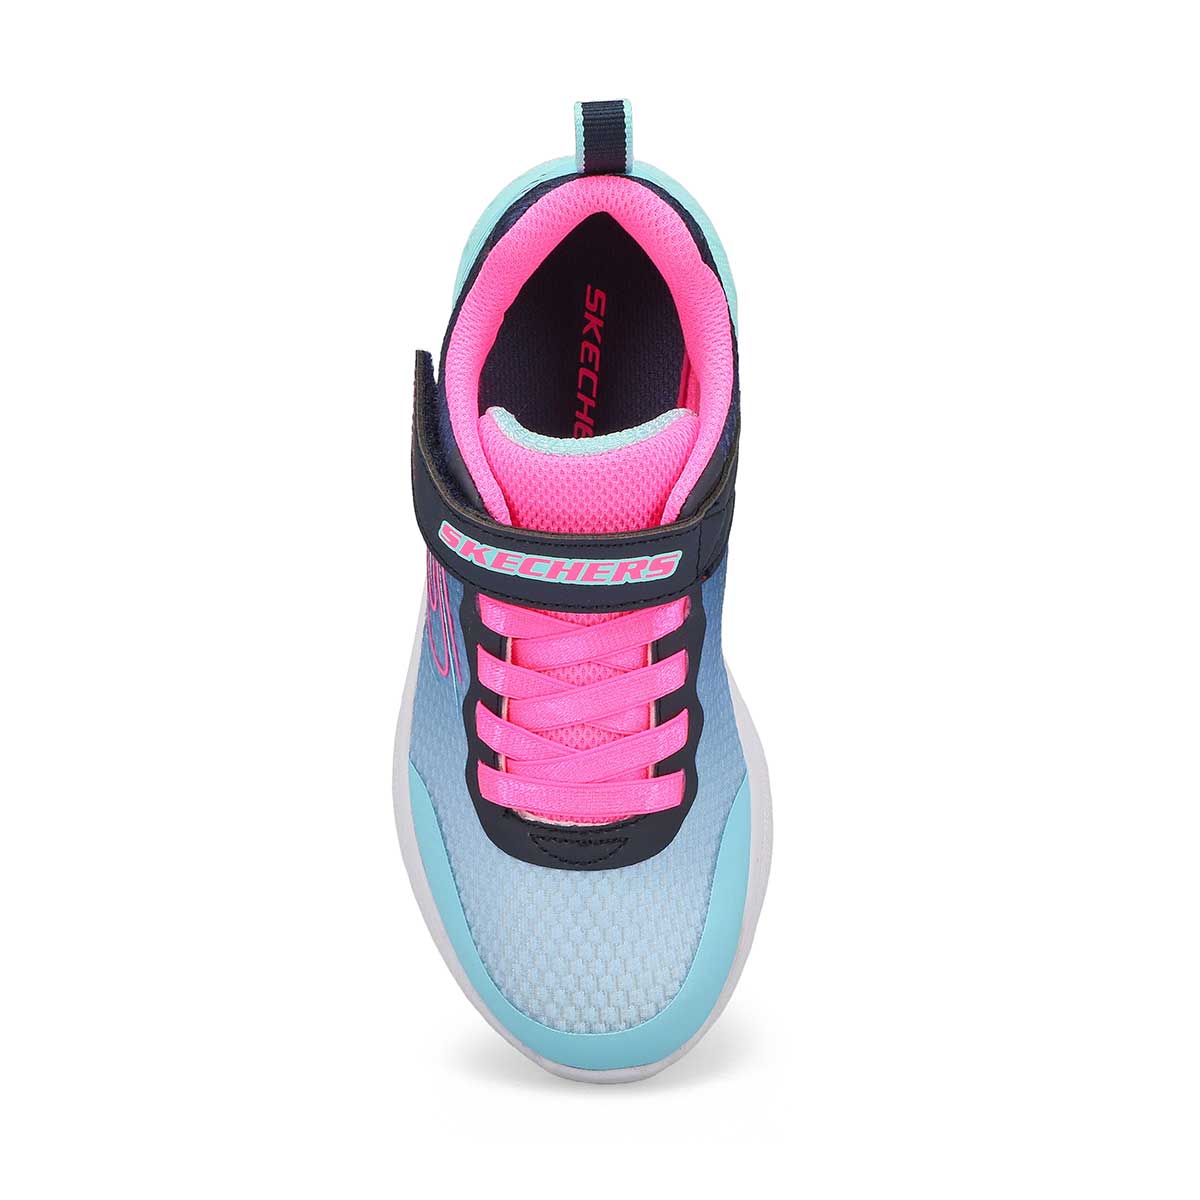 Girls Microspec Max Plus - Echo Sprint Sneaker Navy/Aqua